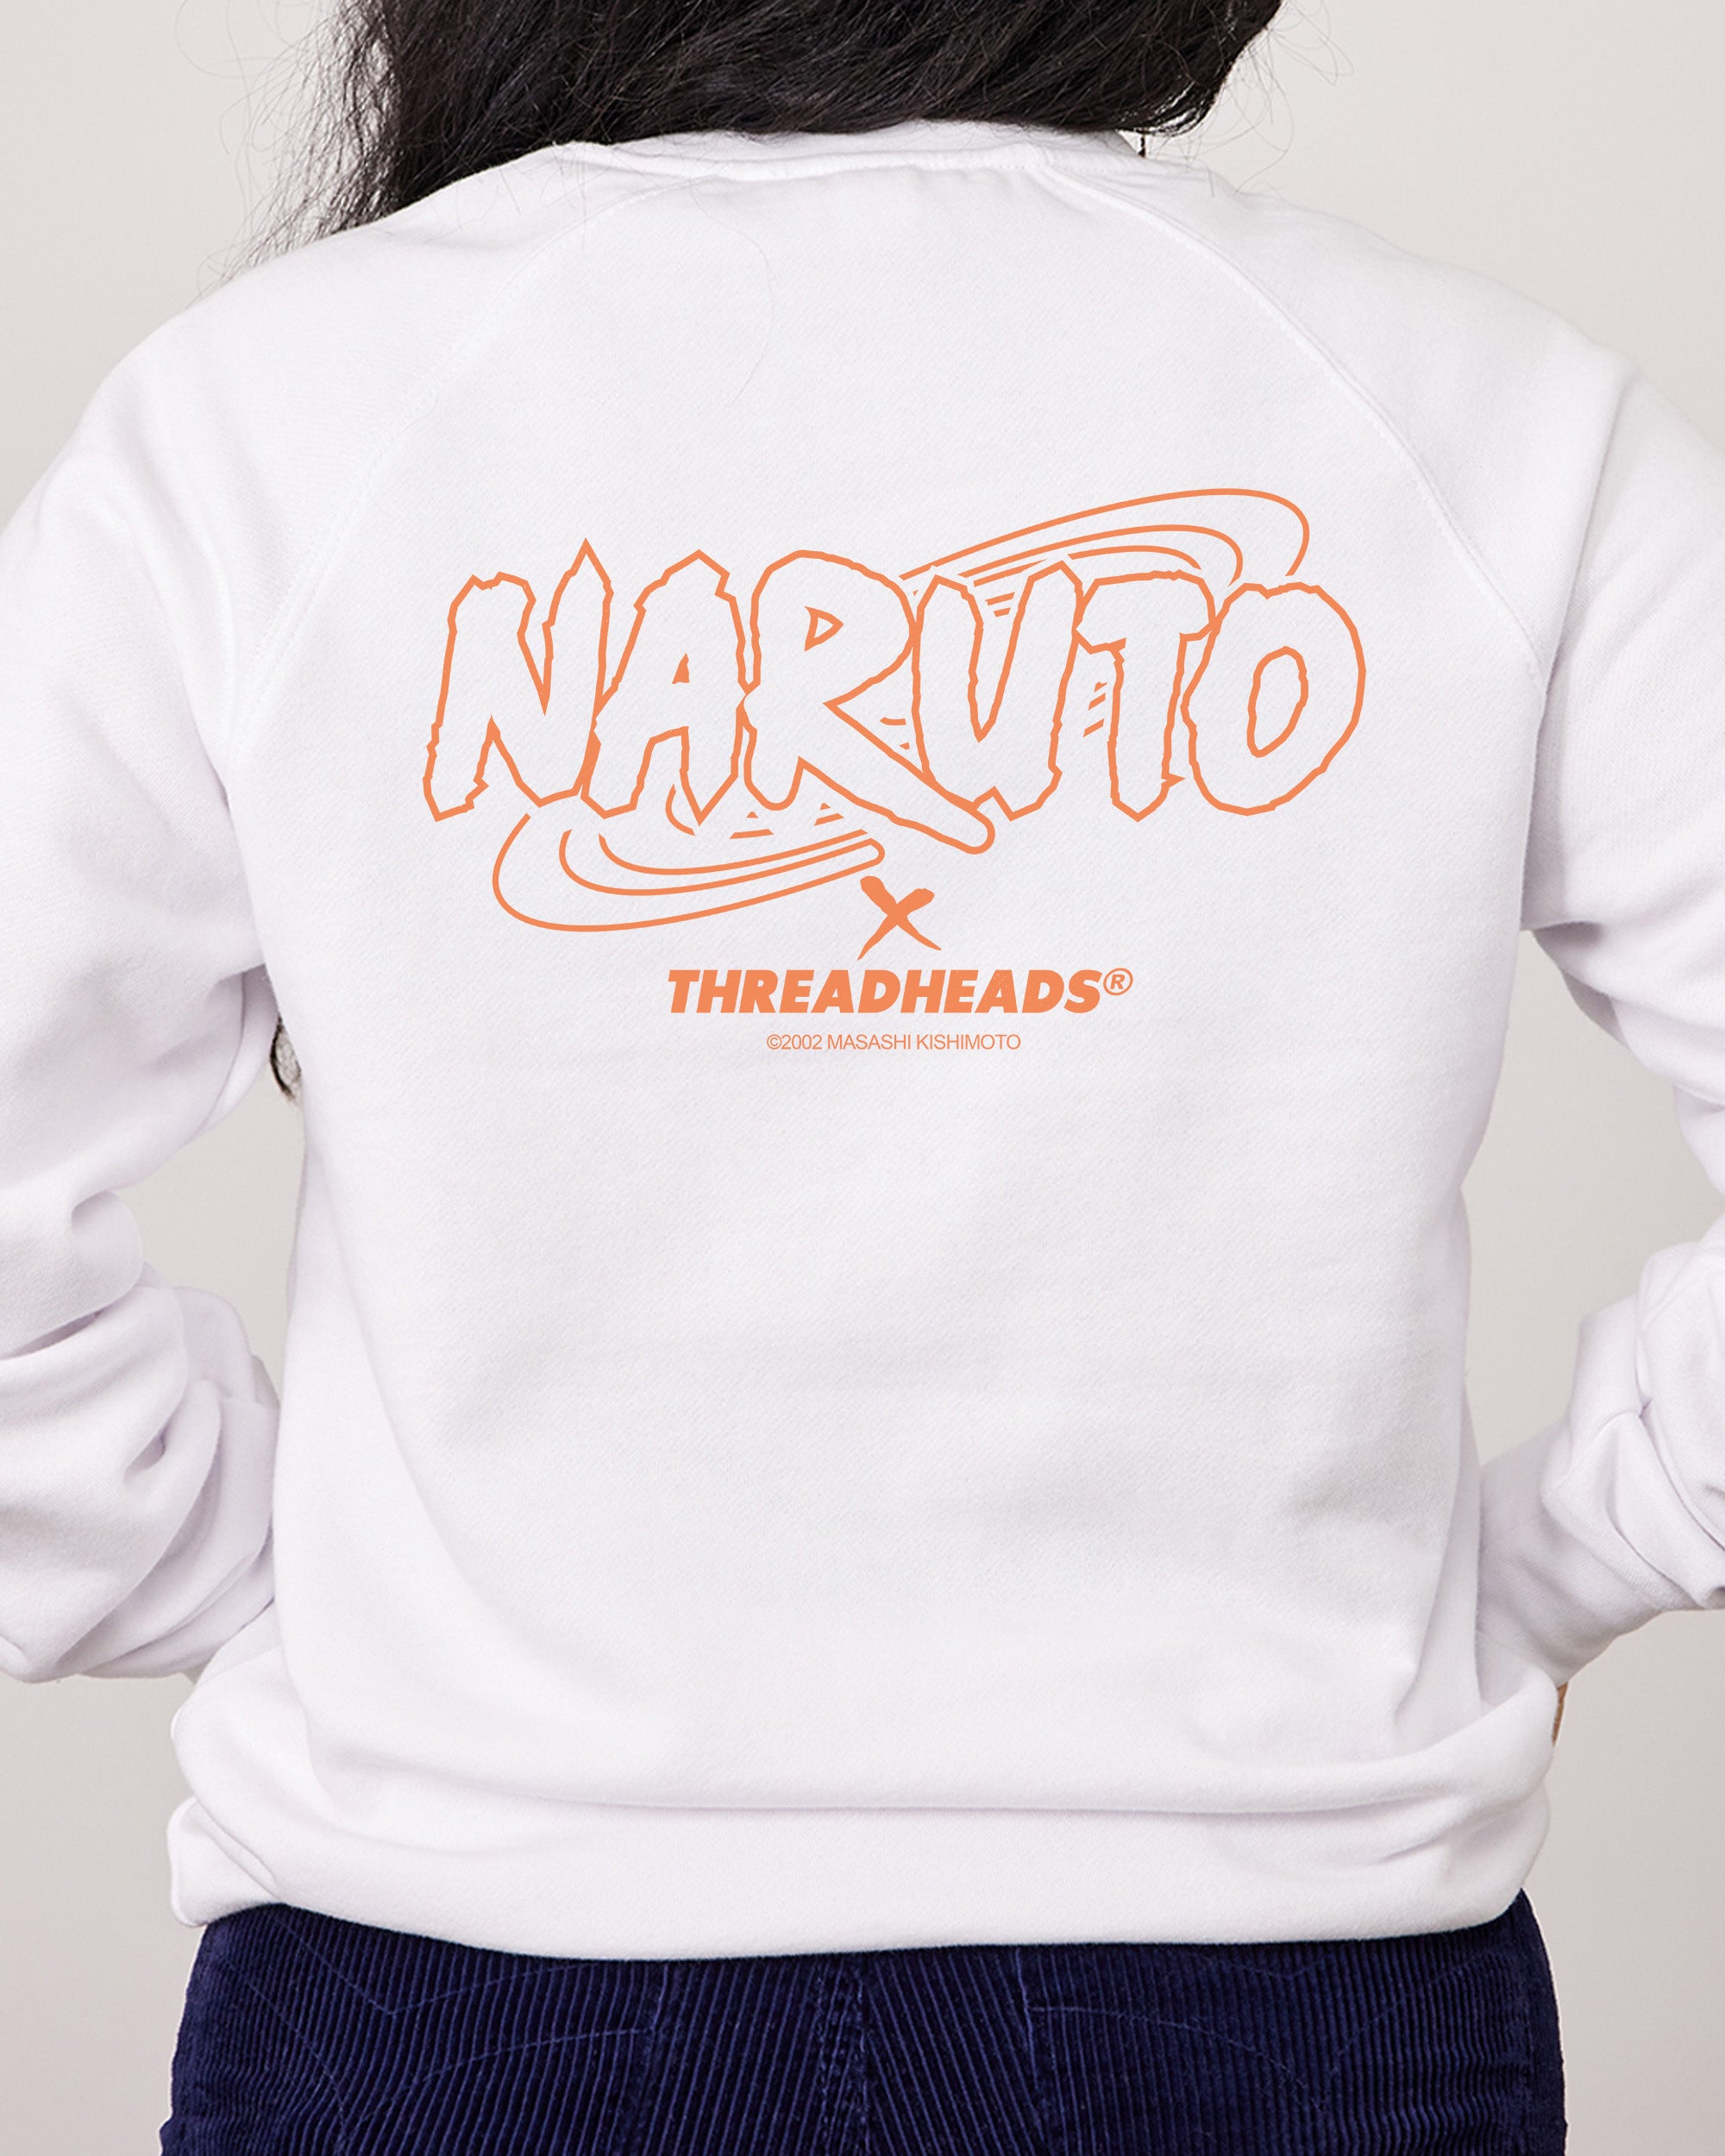 Naruto Ramen Sweater Australia Online